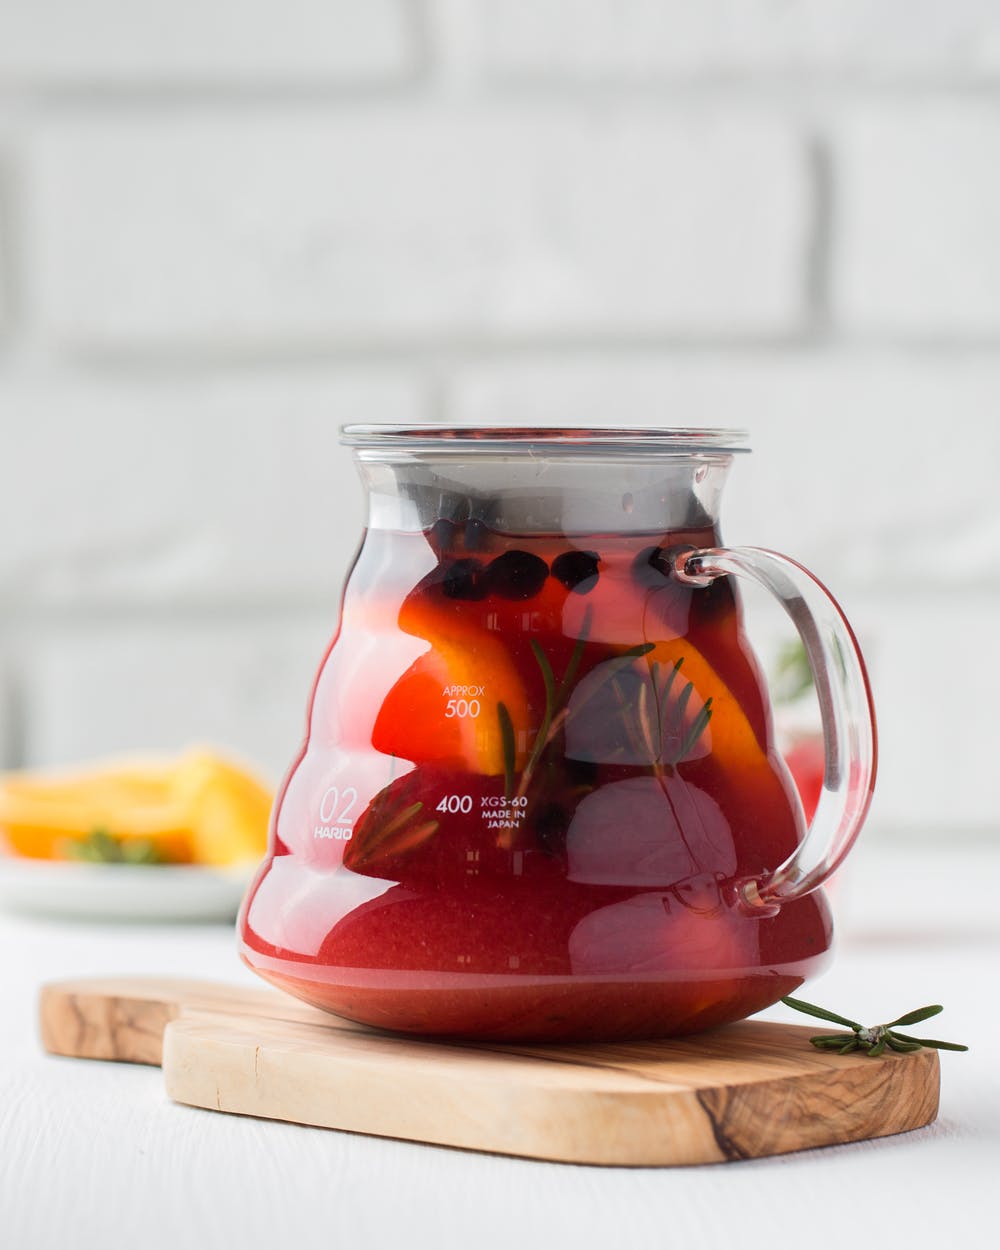 hibiscus tea with fruit inside